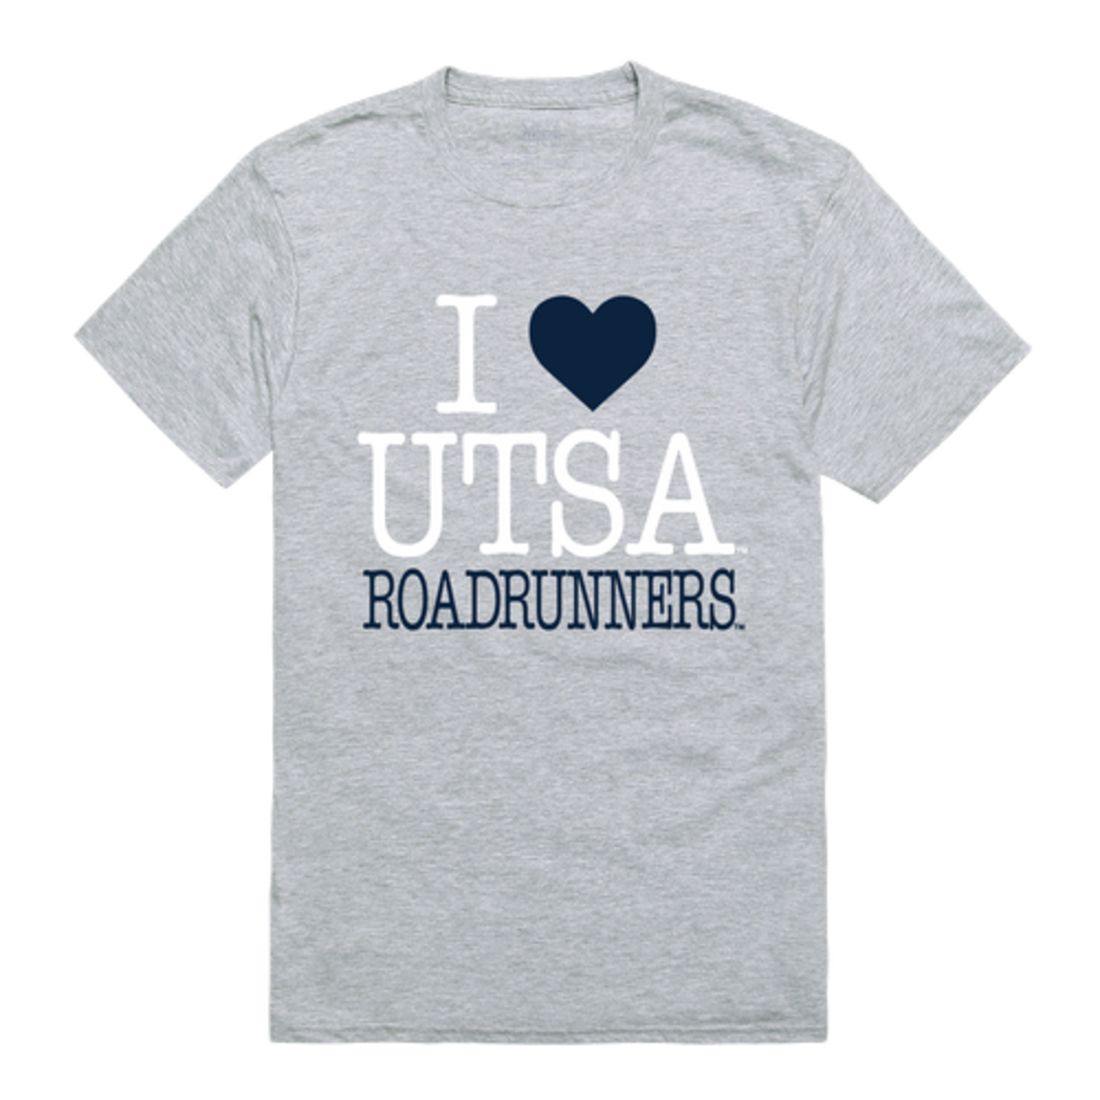 I Love UTSA University of Texas at San Antonio Roadrunners T-Shirt-Campus-Wardrobe